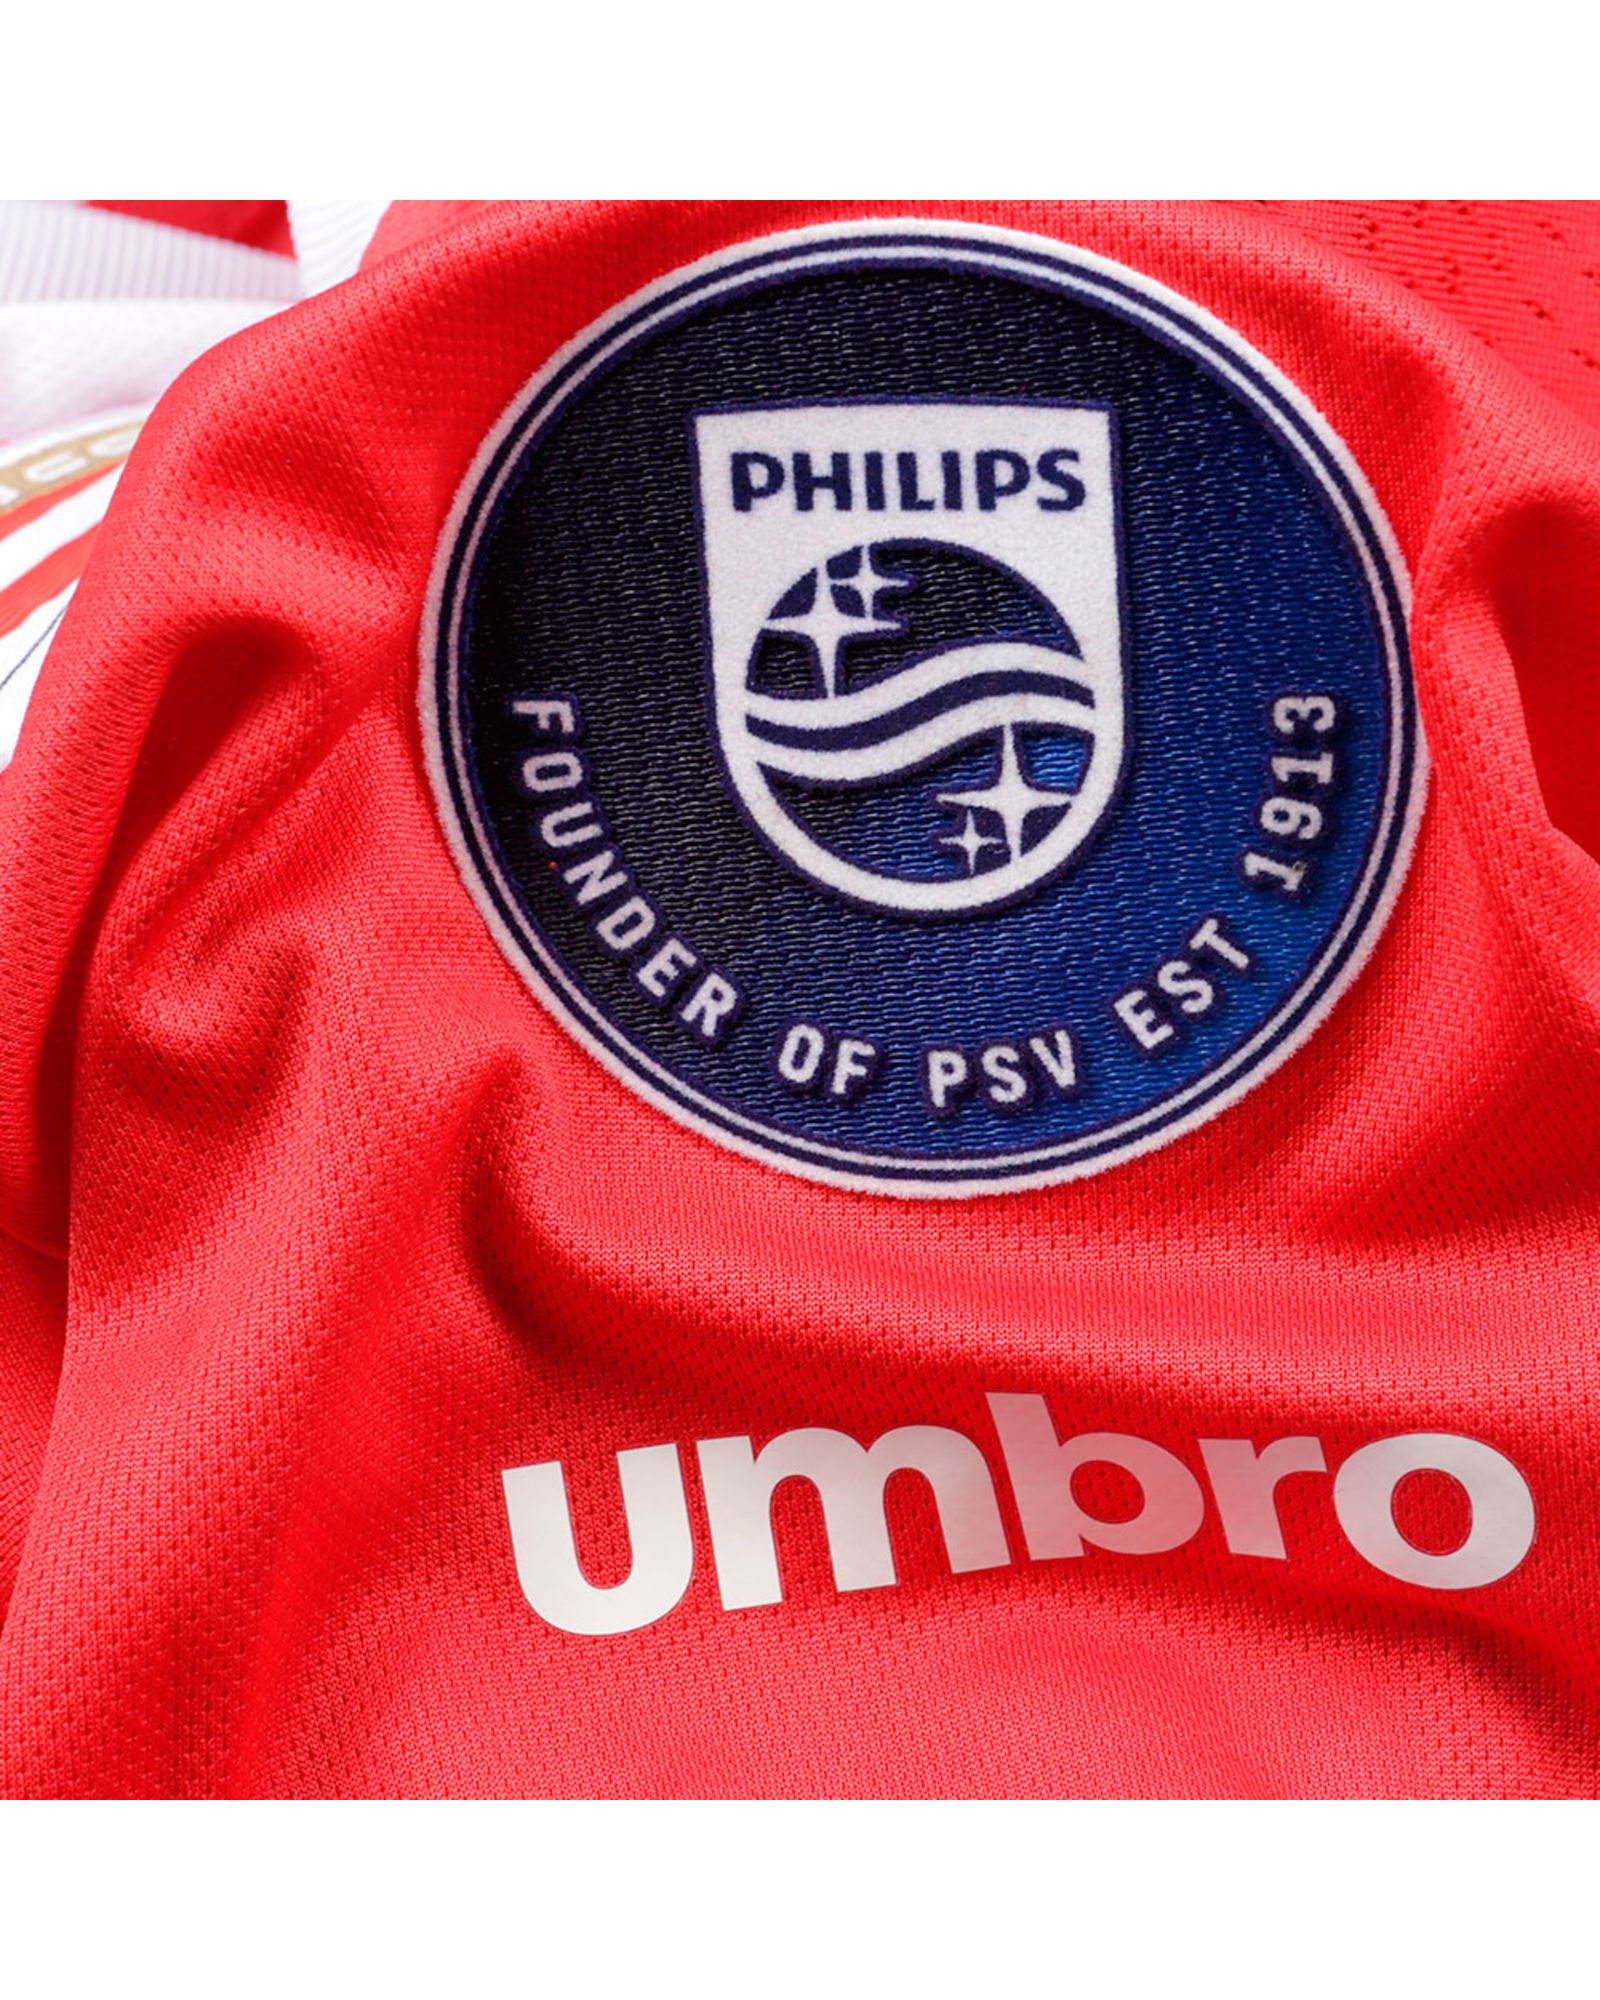 Camiseta 1ª PSV Eindhoven 2016/2017 Rojo Blanco - Fútbol Factory